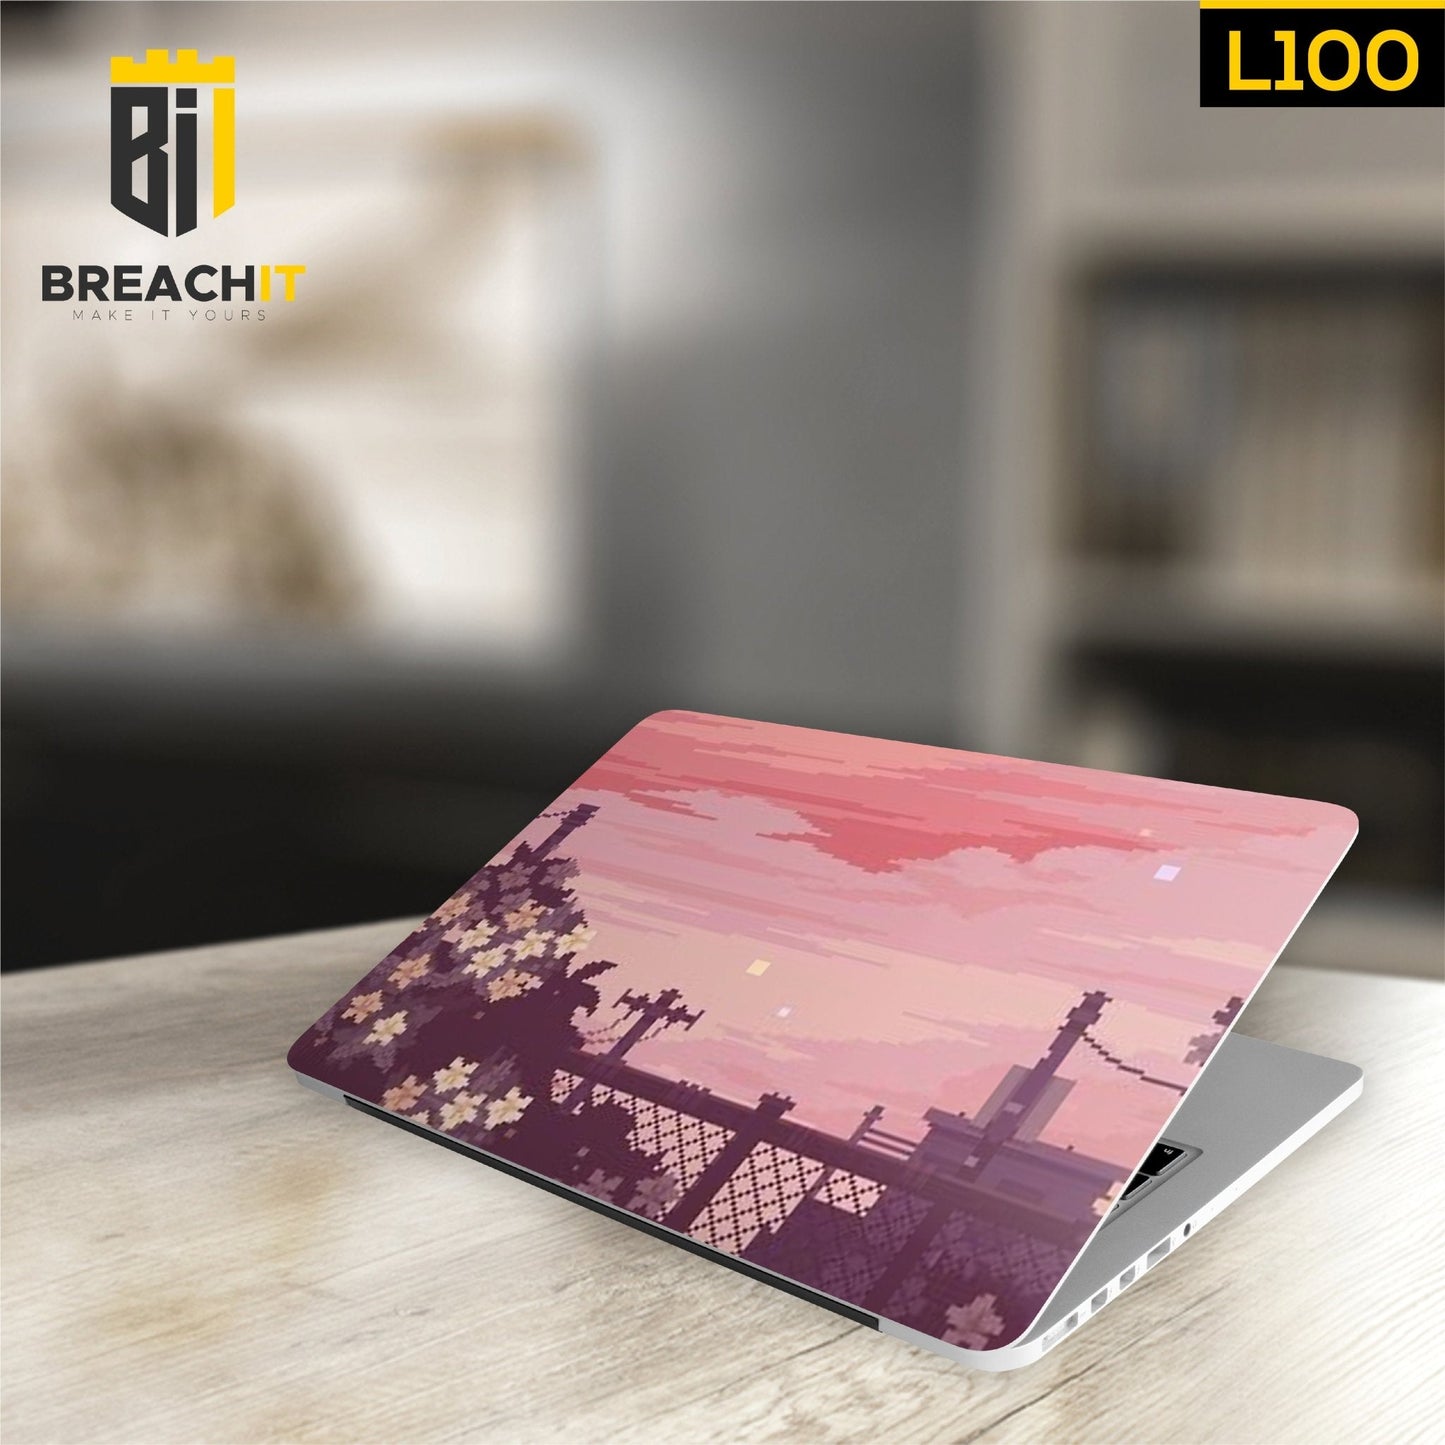 L100 Pink Aesthetic Laptop Skin - BREACHIT